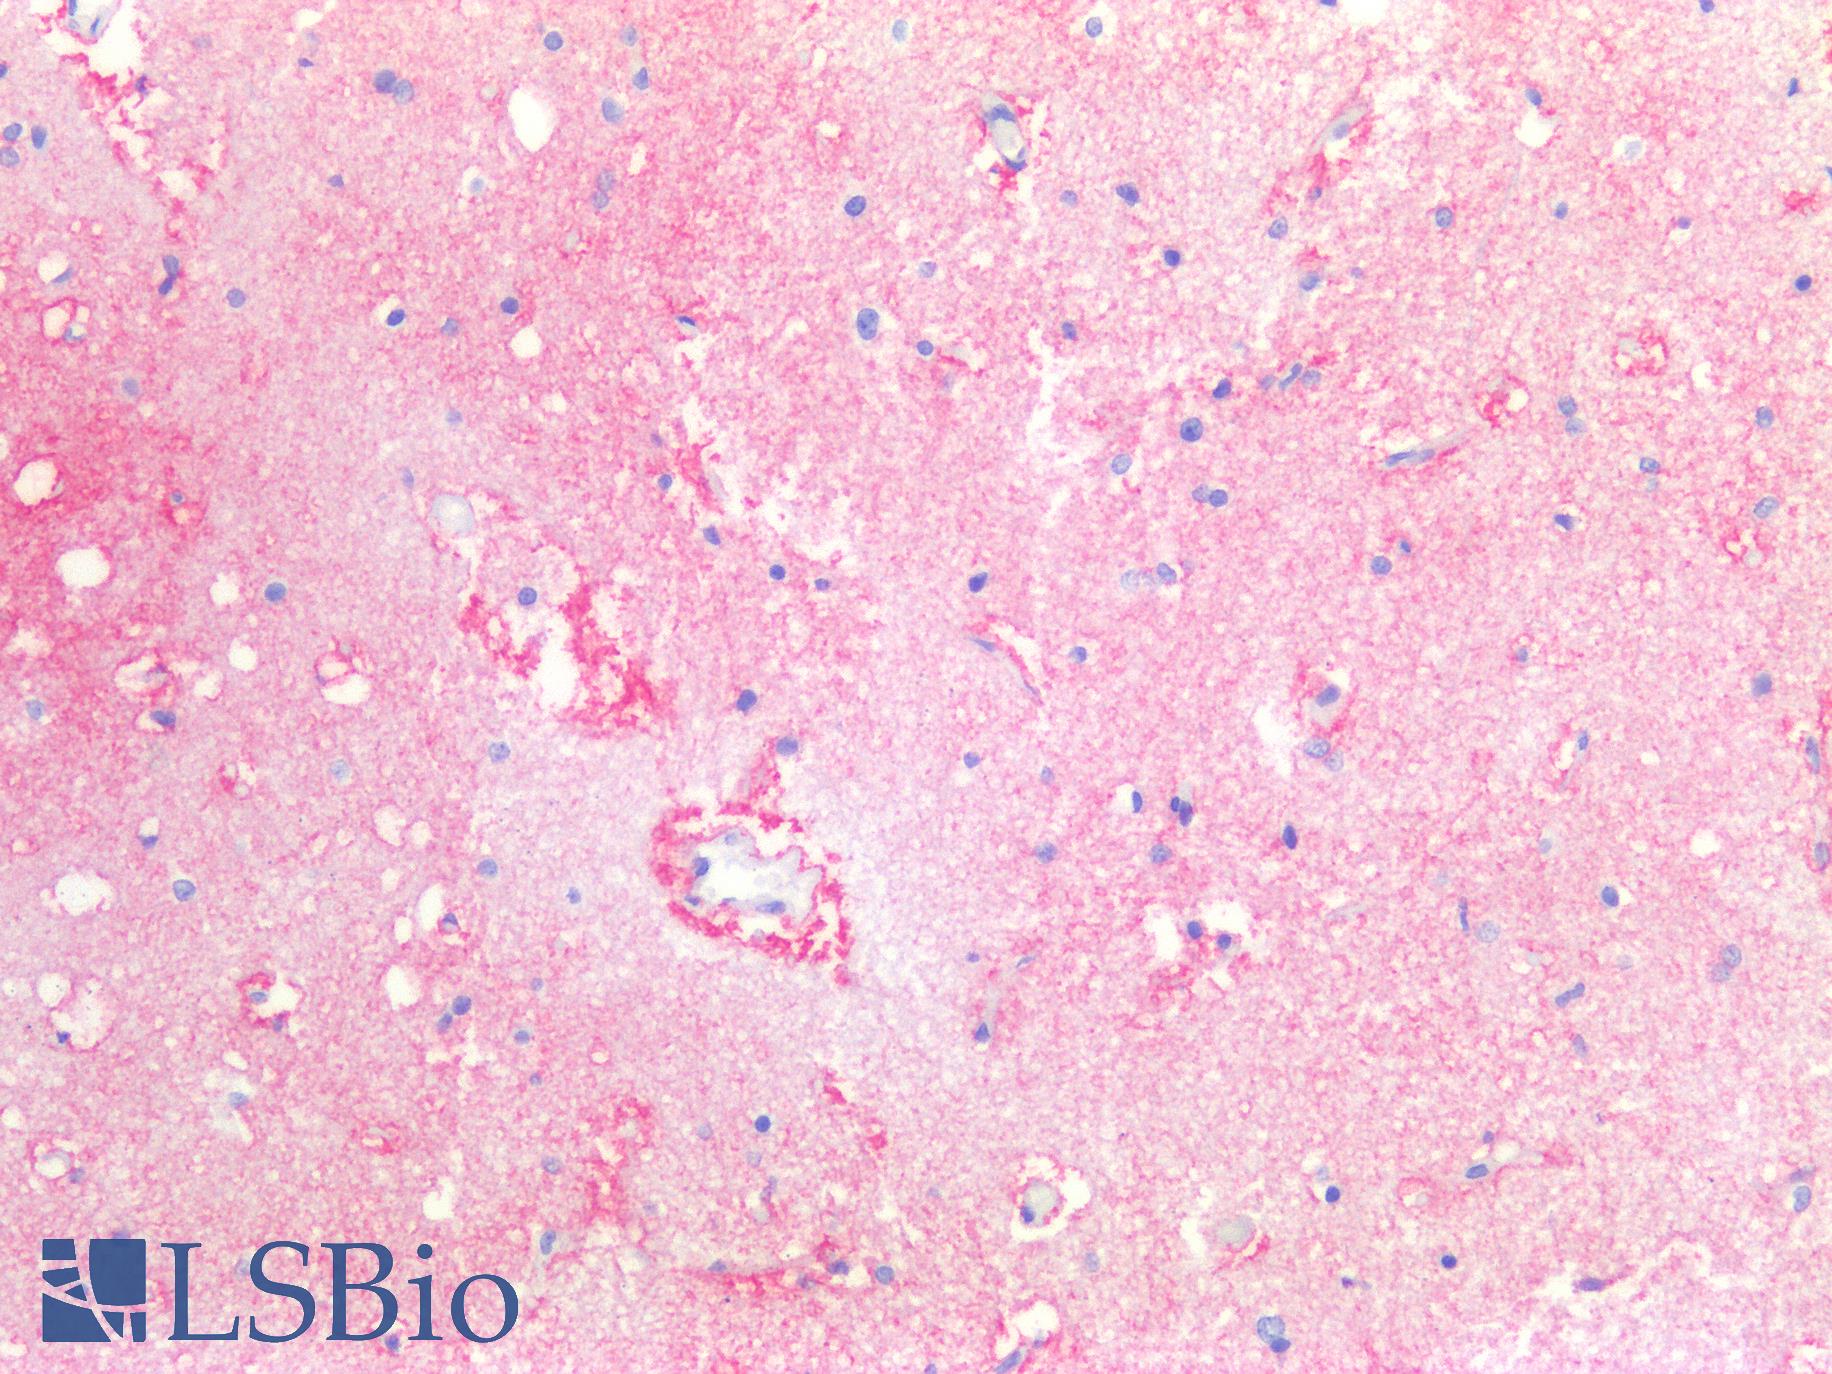 F3 / CD142 / Tissue factor Antibody - Human Brain, Cortex: Formalin-Fixed, Paraffin-Embedded (FFPE)